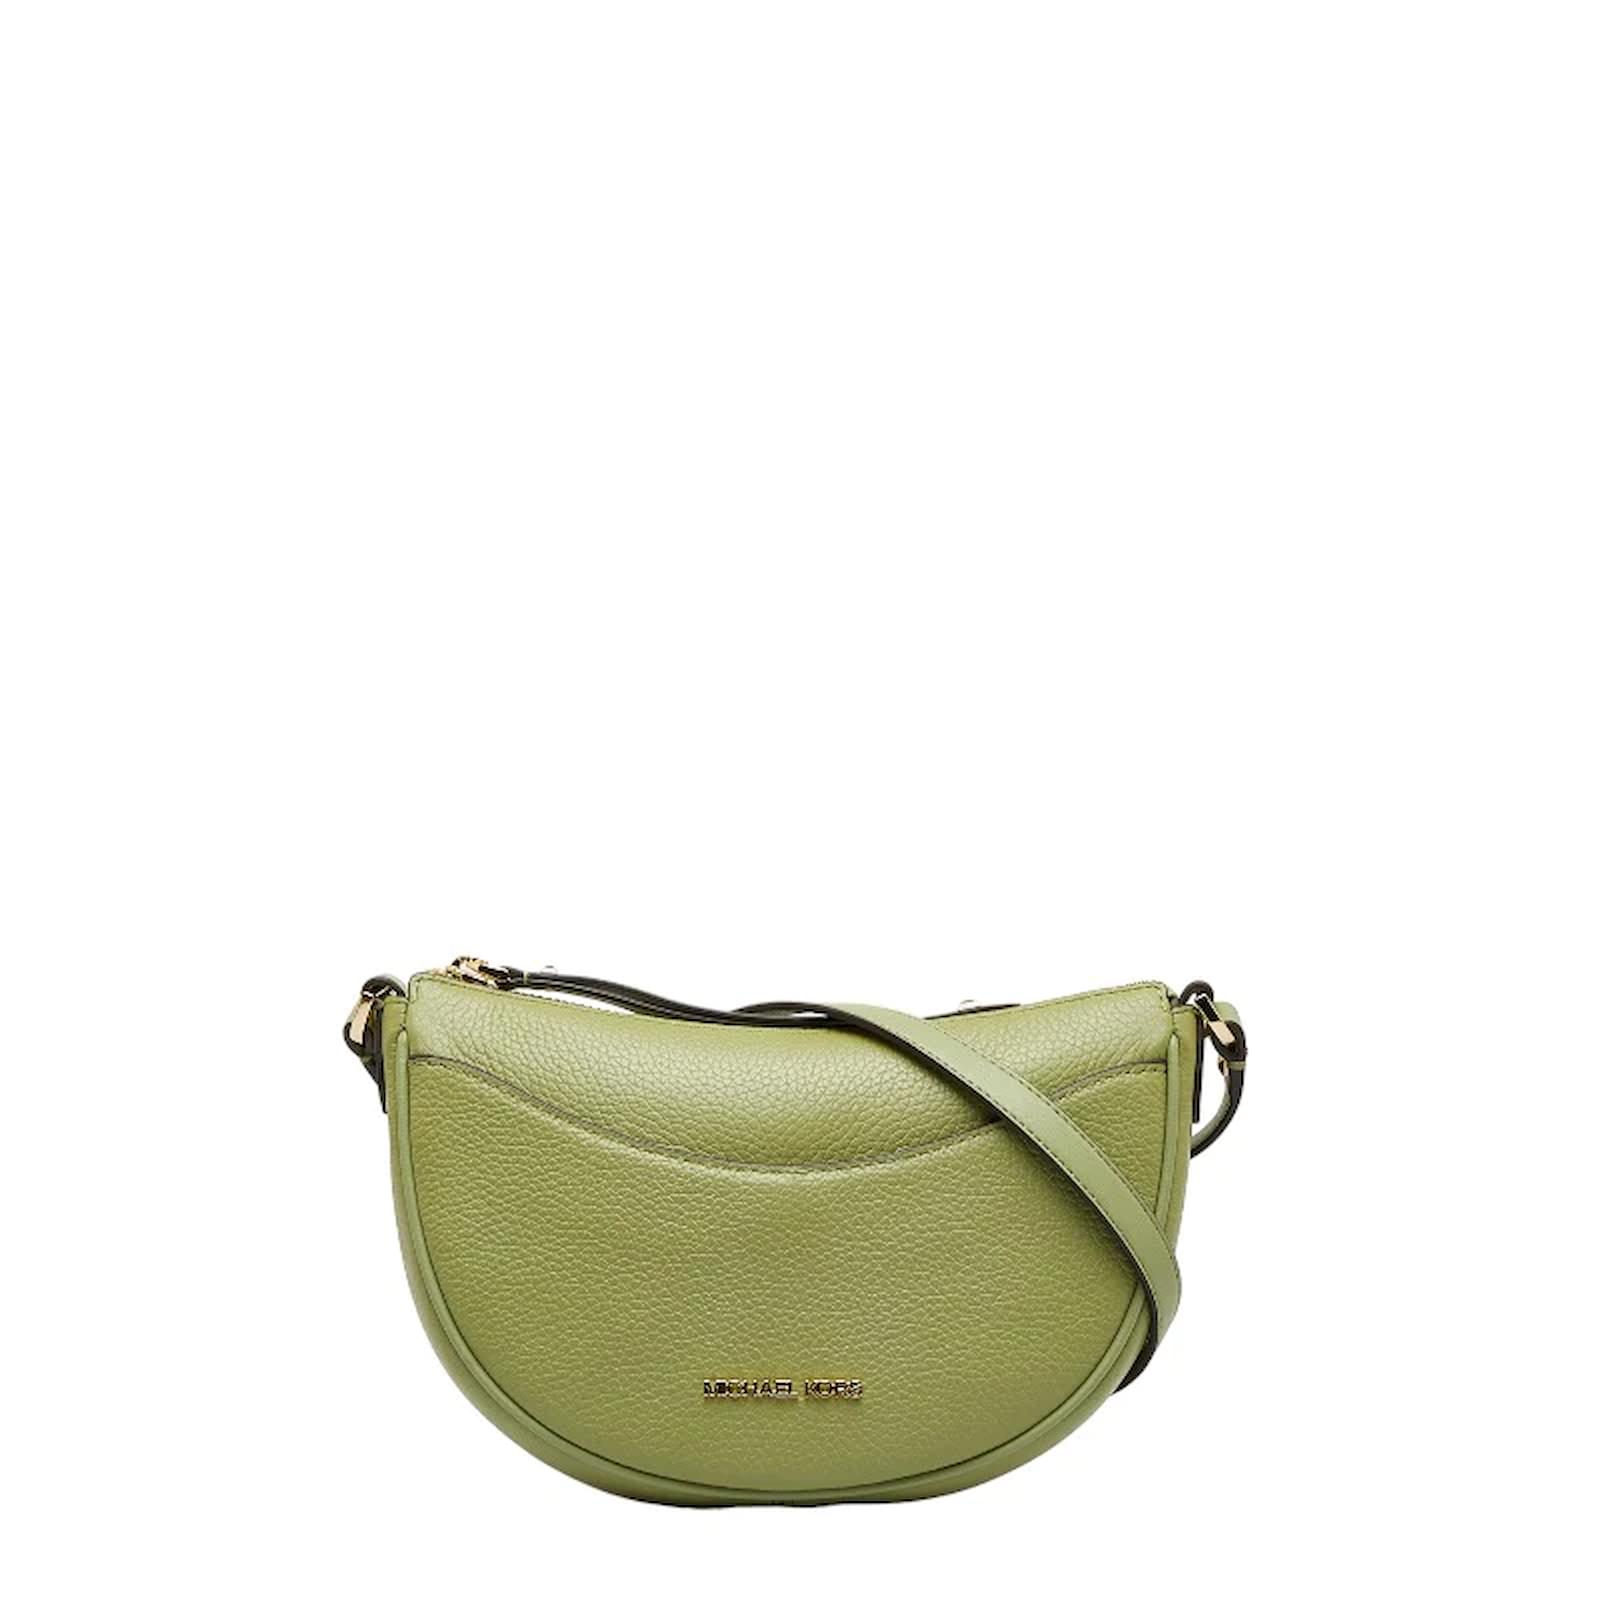 Michael Kors Small Leather Dover Crossbody Bag 35R3g4dc5l Green